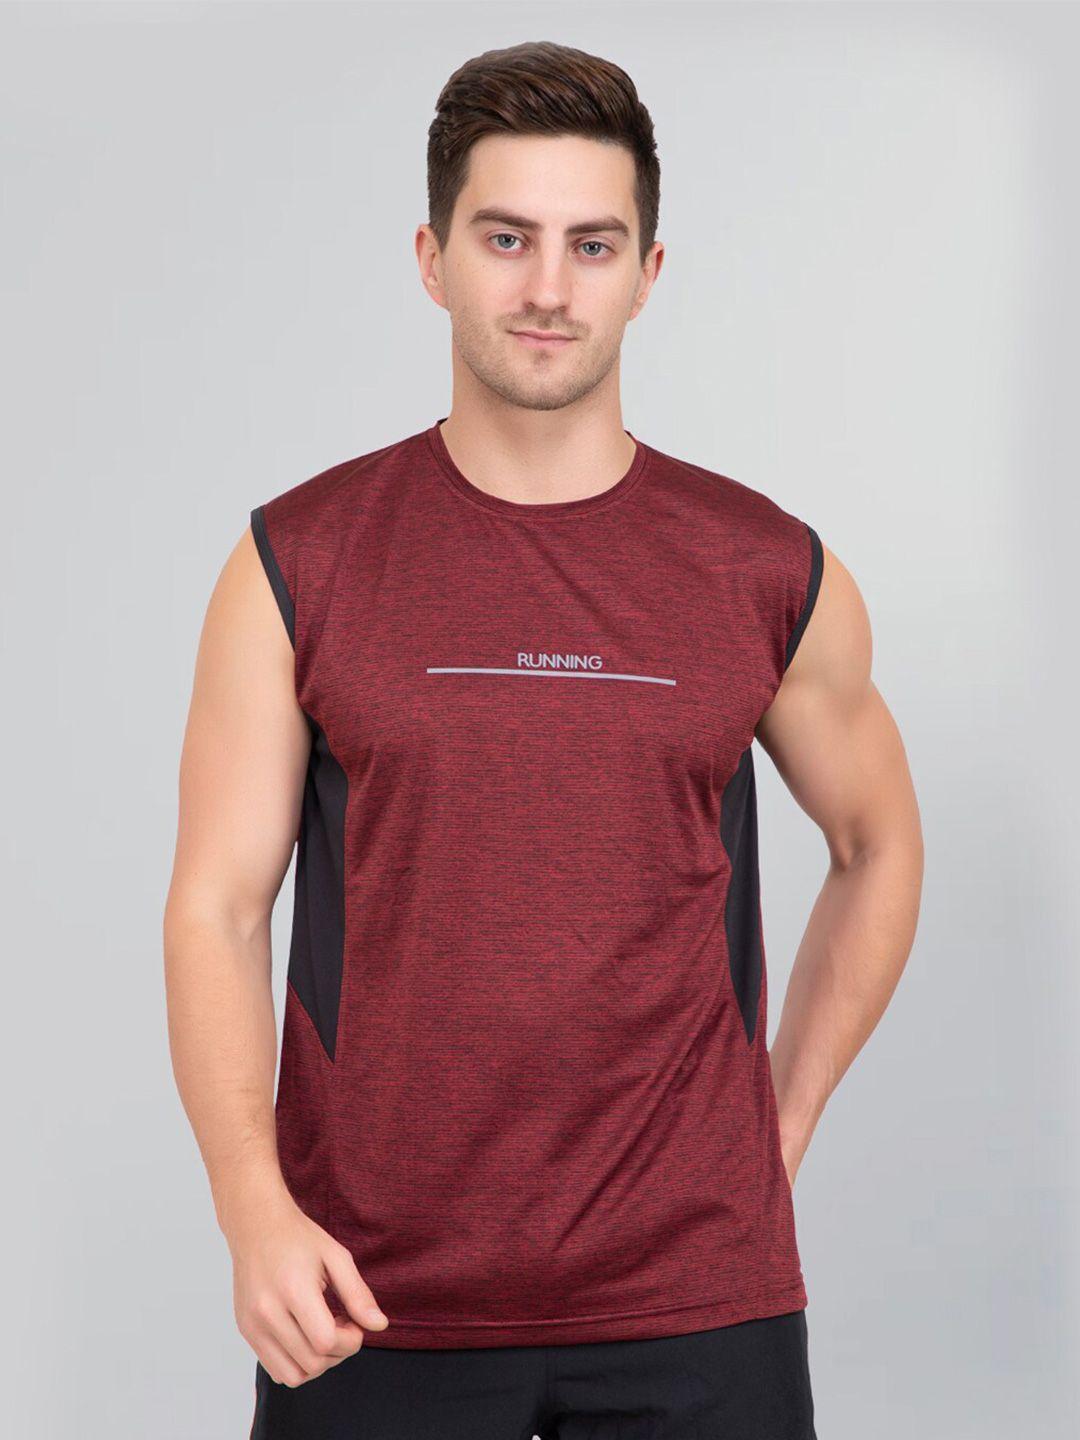 godfrey men sleeveless dry fit sports t-shirt